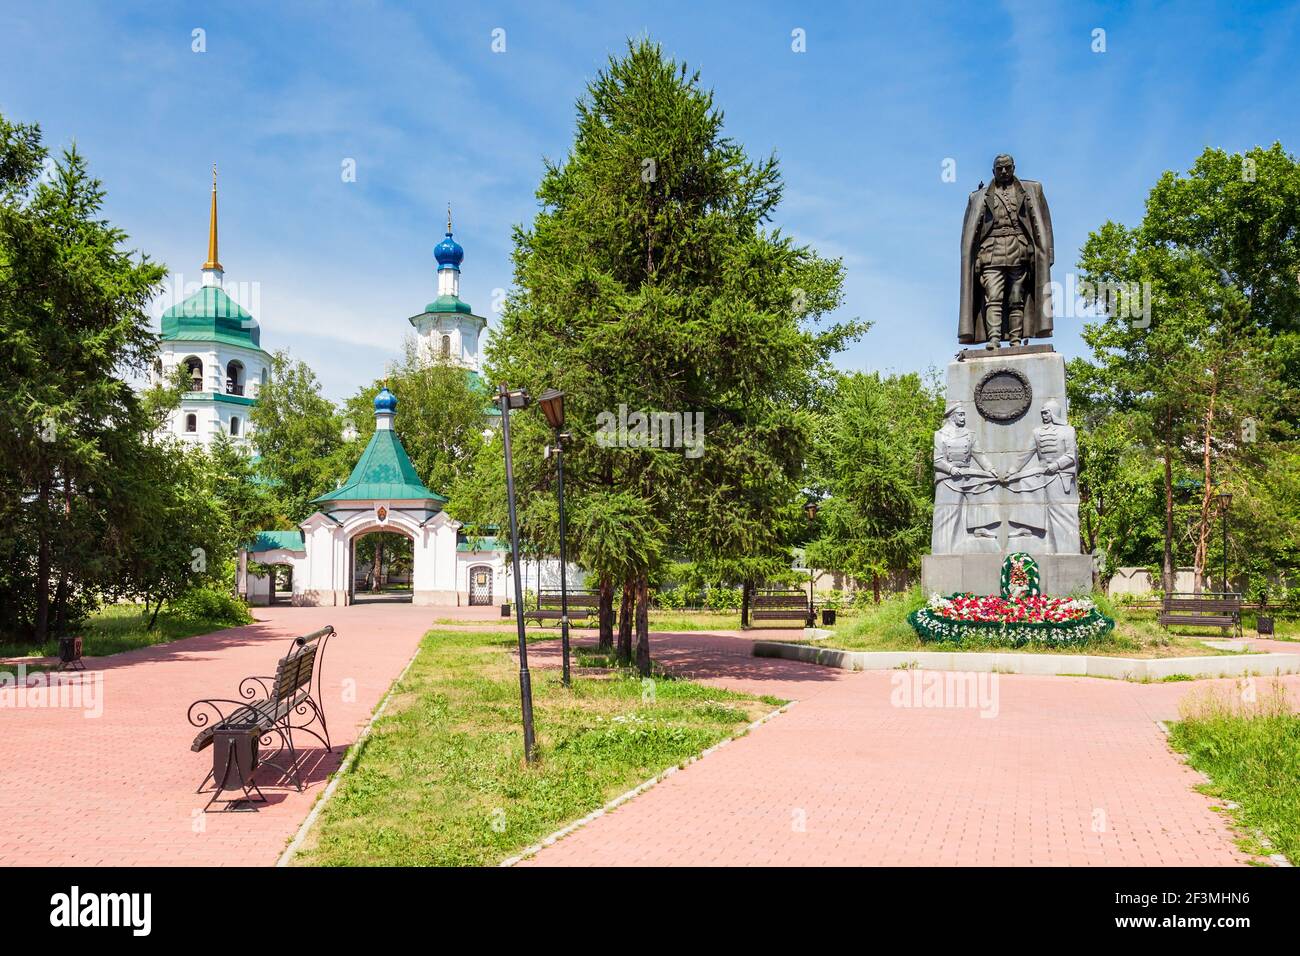 Znamensky Monastery and Kolchak monument. Znamensky Monastery is a Orthodox convent situated in Irkutsk, Russia. Stock Photo